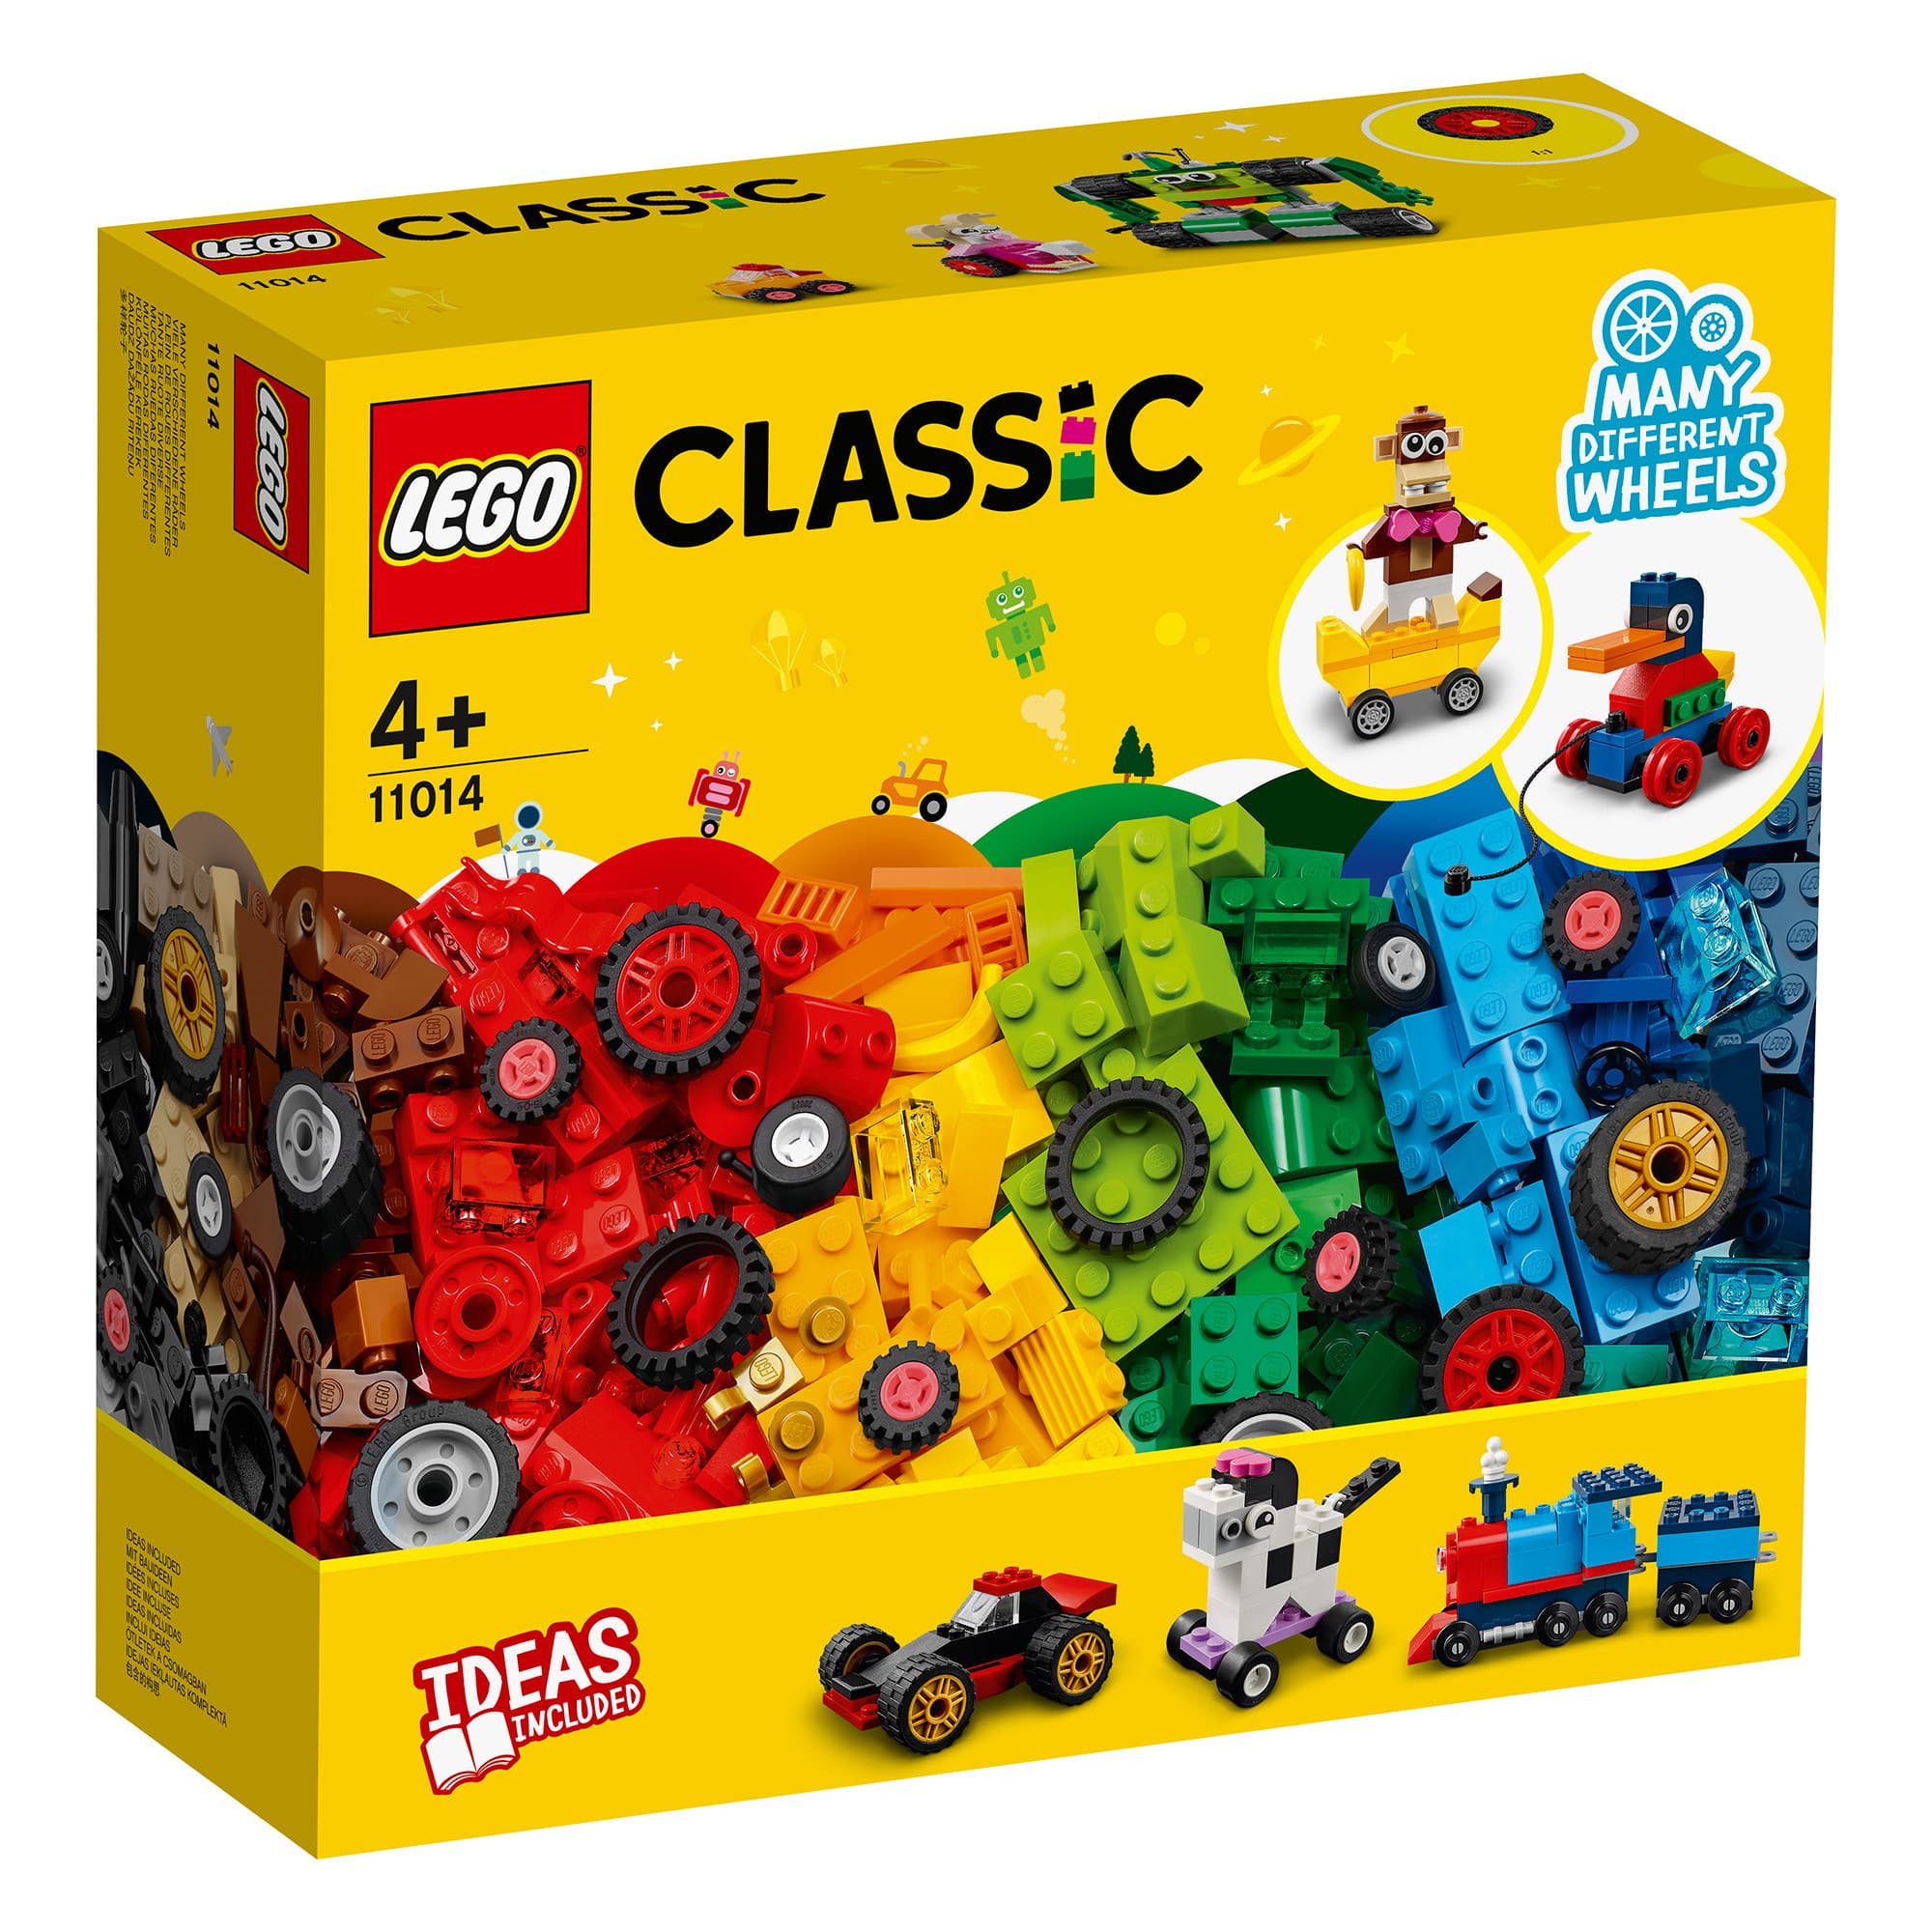 LEGO Classic 11014 - Bricks and Wheels